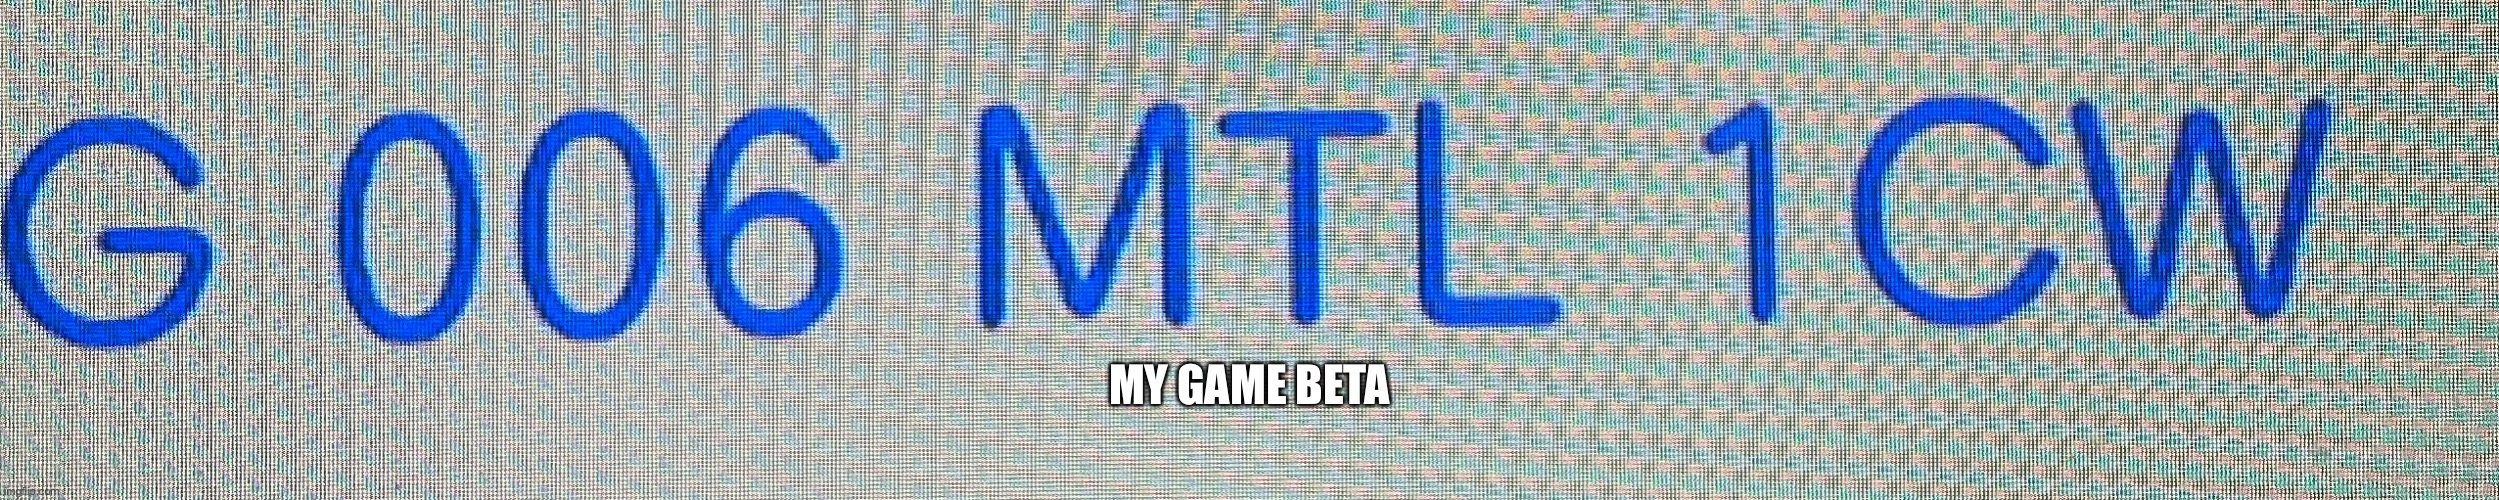 MY GAME BETA | made w/ Imgflip meme maker